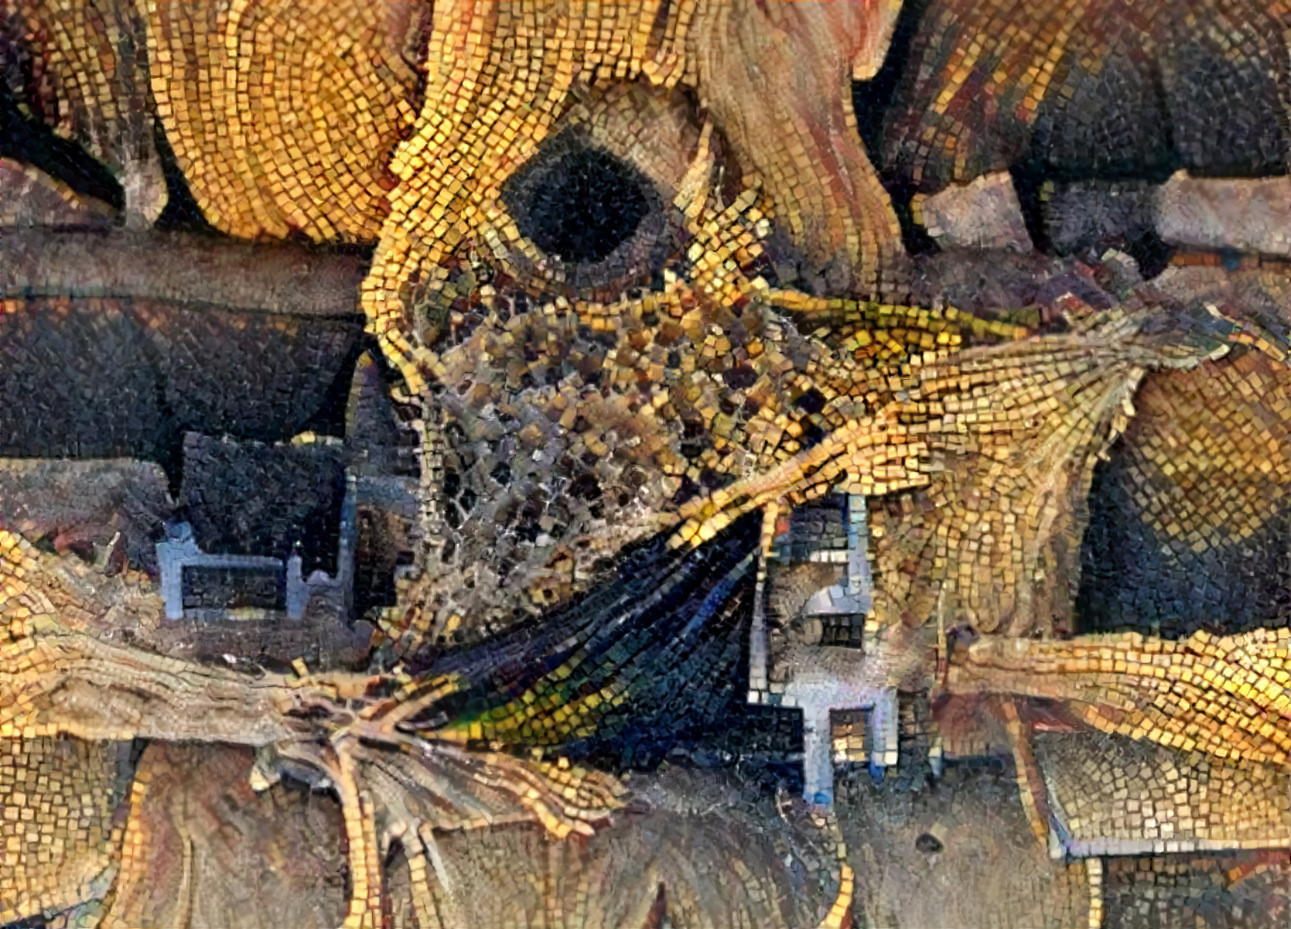 Communal nest